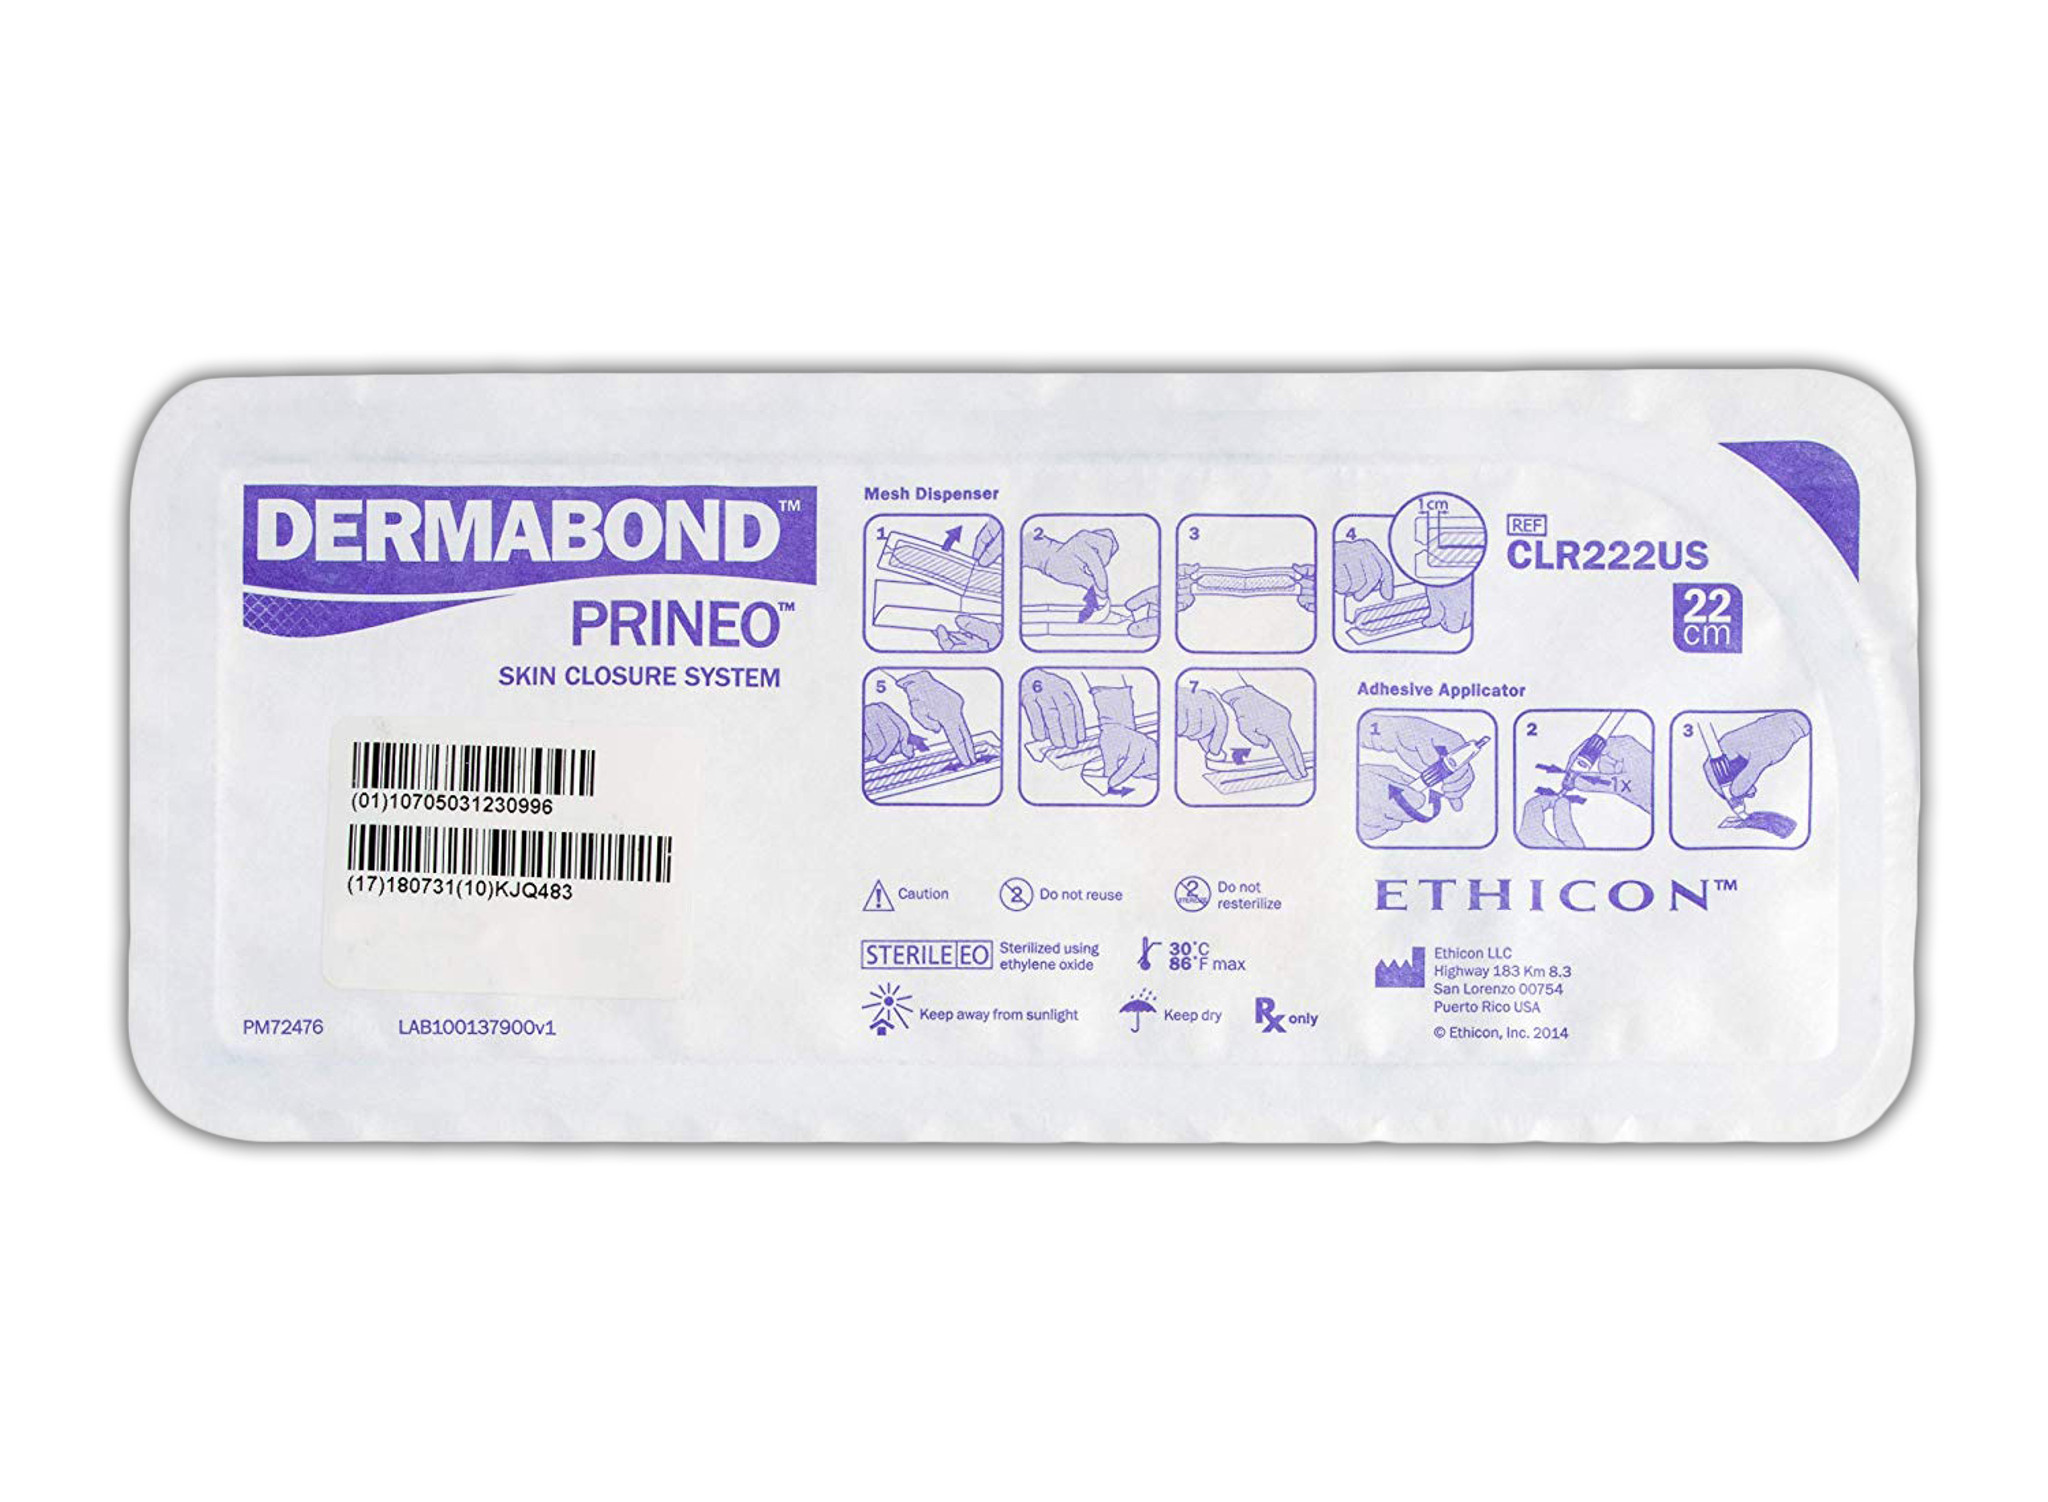 Buy Ethicon DERMABOND PRINEO Skin Closure System (42 cm), CLR422US